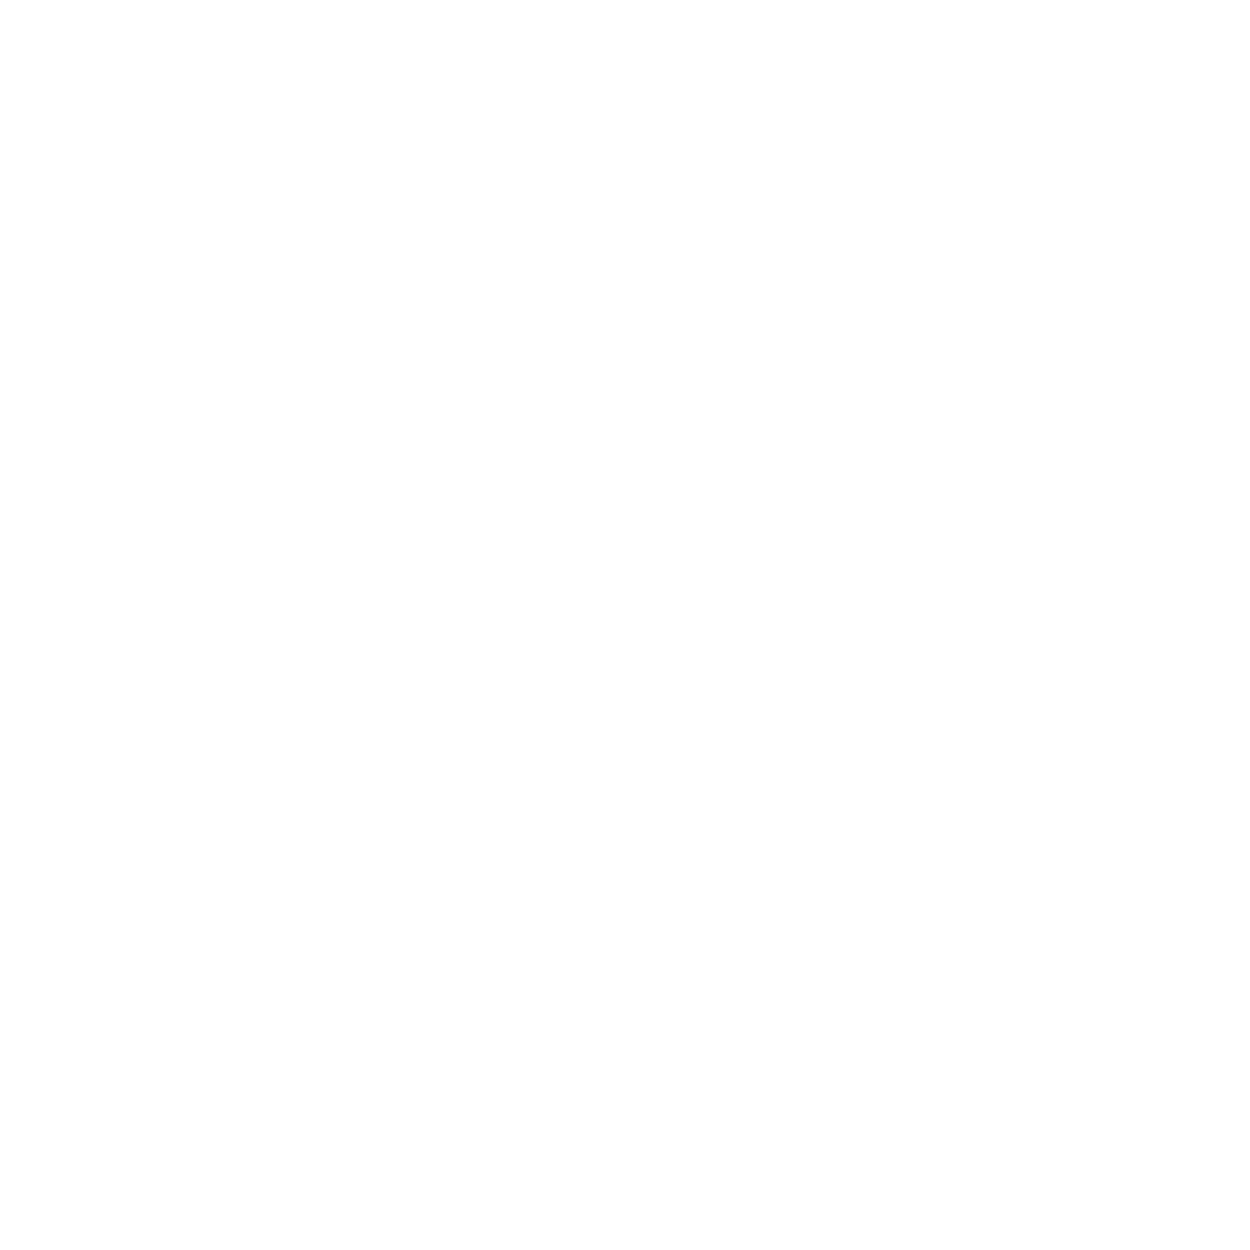 World Land Trust - Carbon Balanced Company